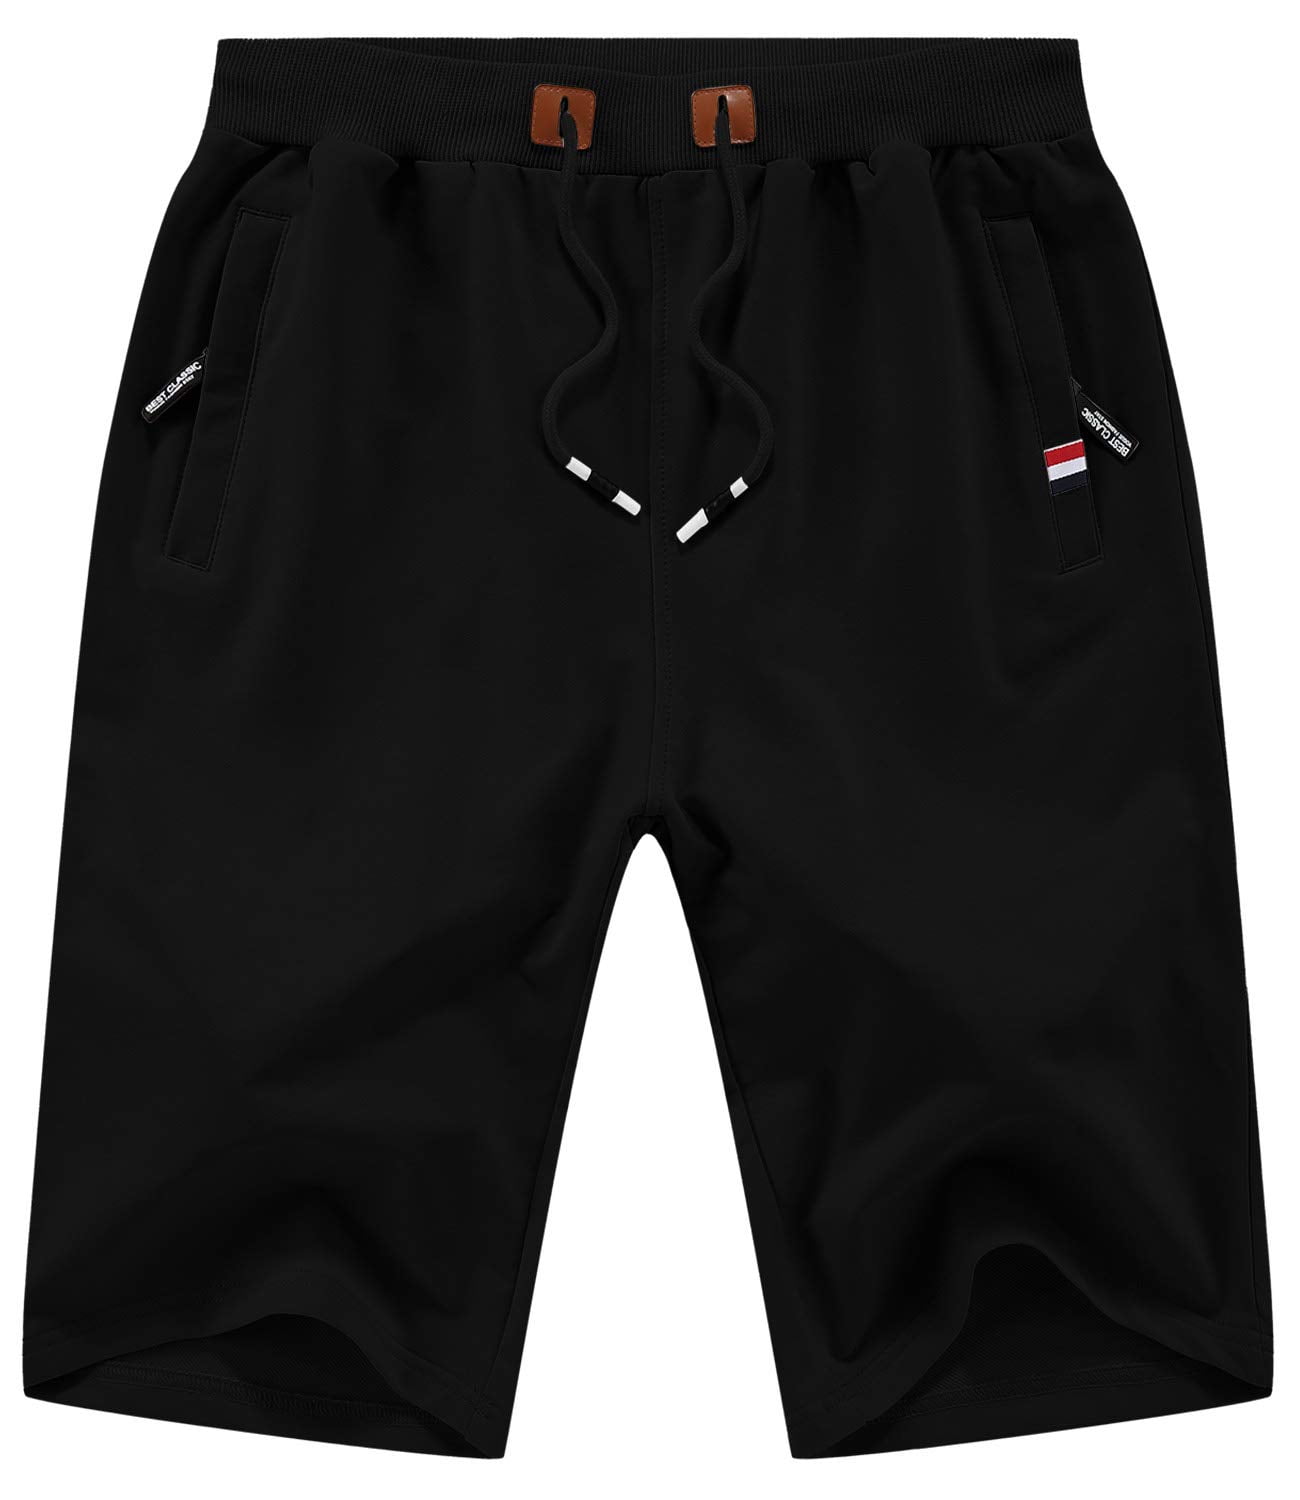 Aiyino Men's Shorts Casual Classic Fit Drawstring Summer Beach Shorts ...